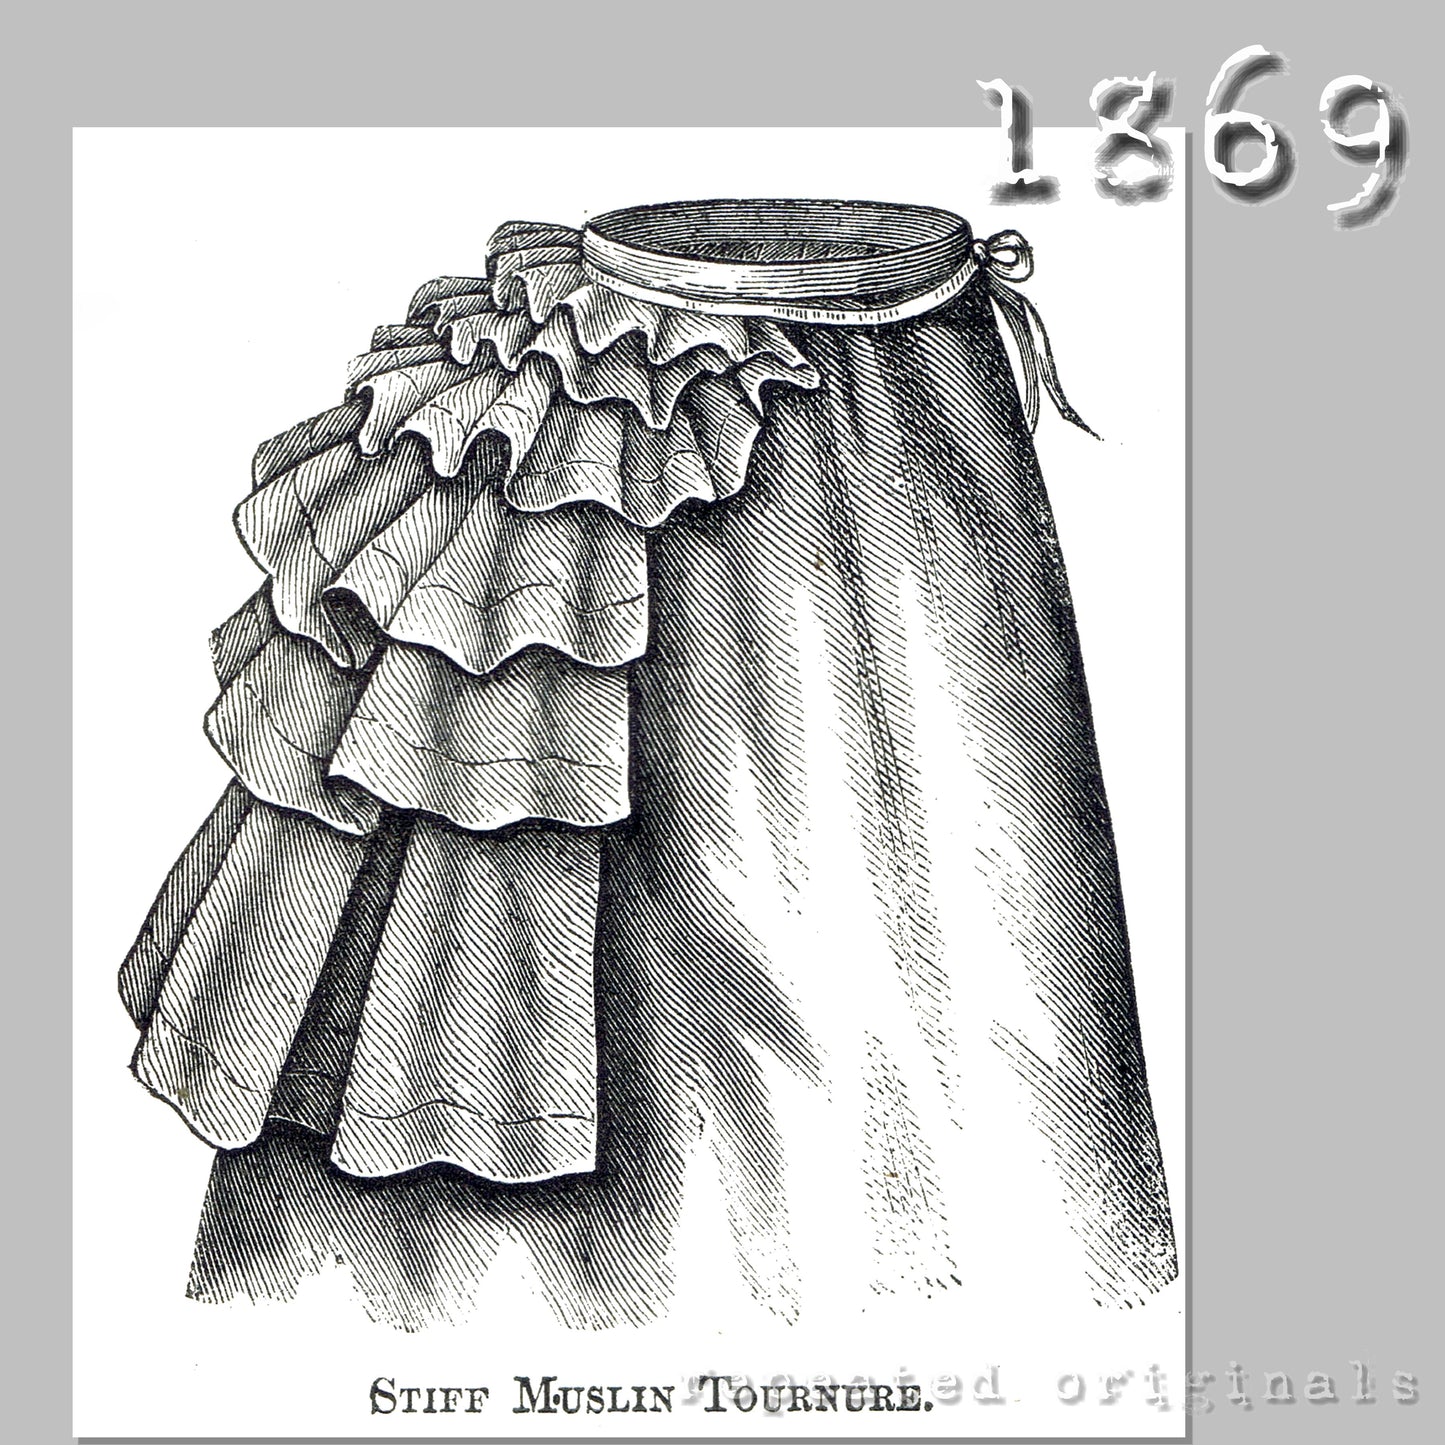 1869 Stiff Muslin Tournure Sewing Pattern - INSTANT DOWNLOAD PDF